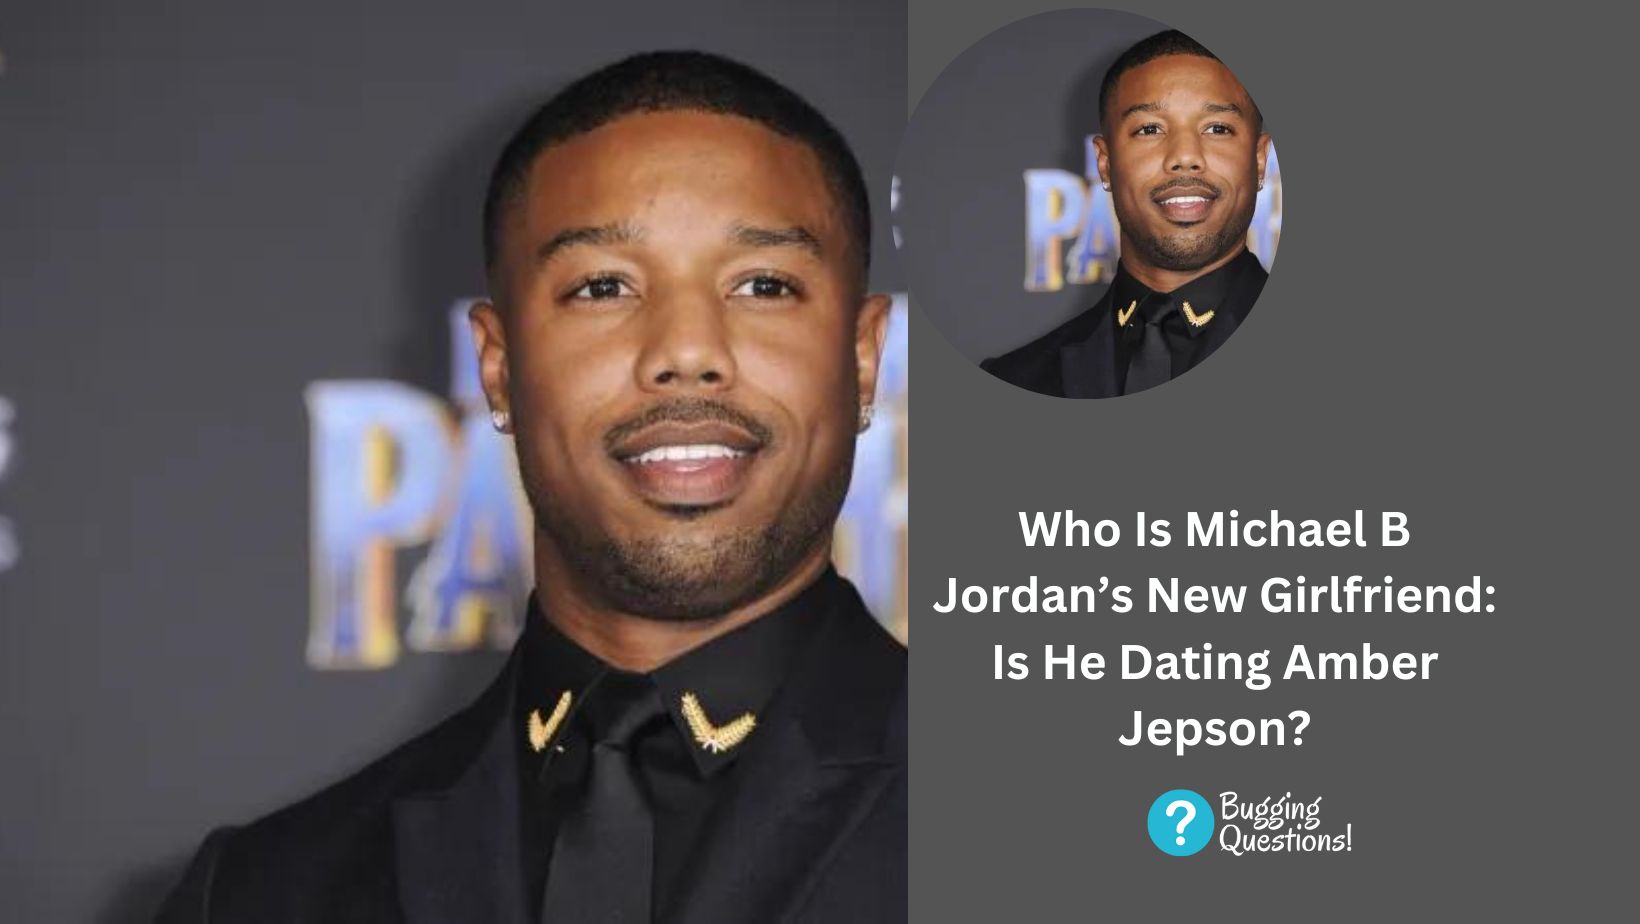 Who Is Michael B Jordan’s New Girlfriend: Is He Dating Amber Jepson?